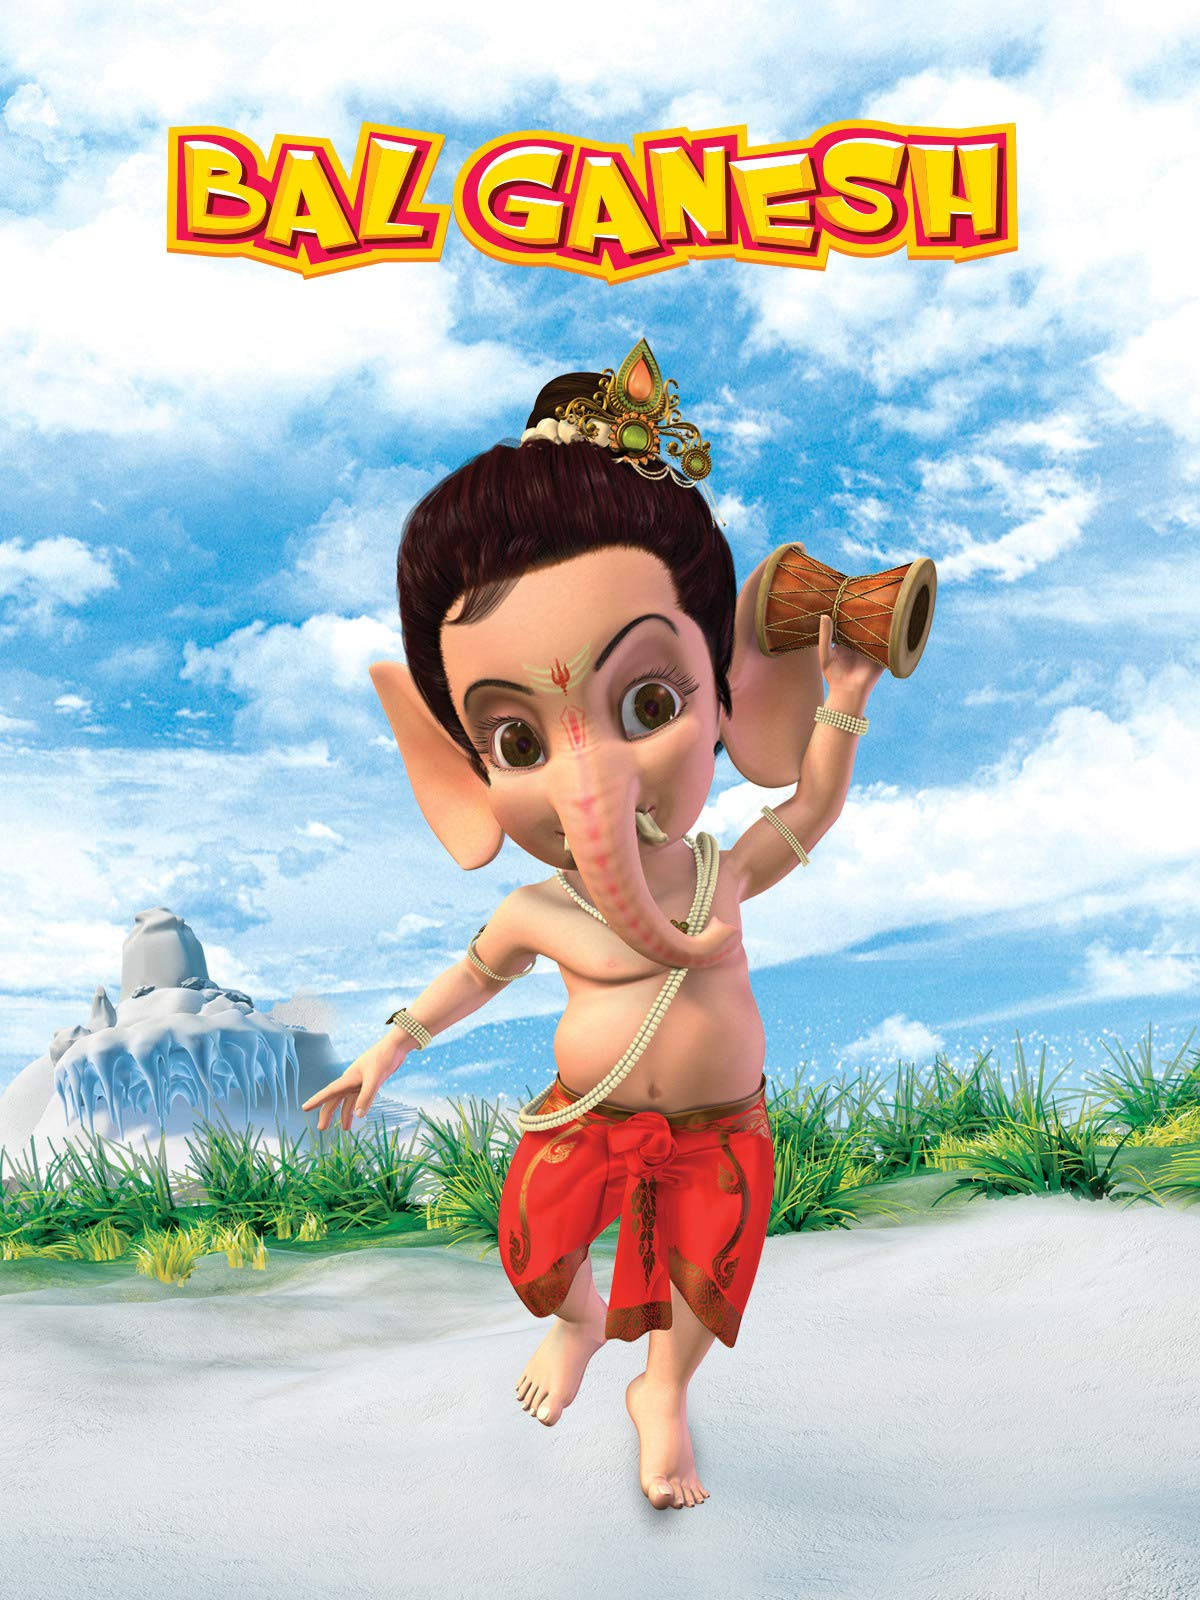 Caption: Divine Adventures Of Bal Ganesh Running On Sand Background